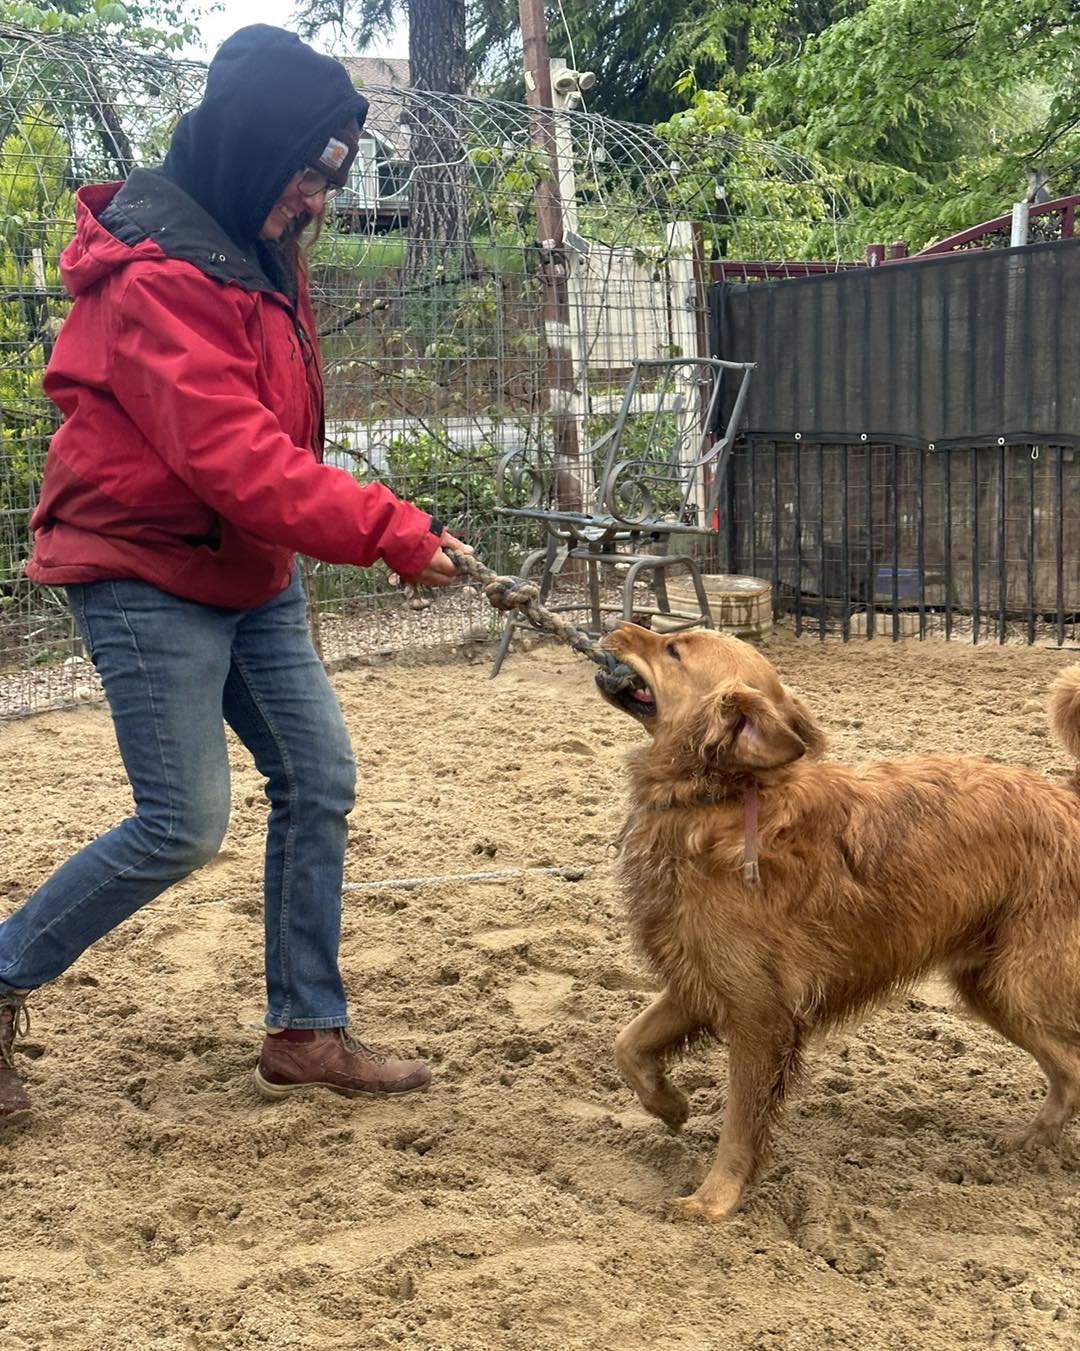 Lucky Coco getting some one on one playtime with Lauren 💛 #dogmob #palpack #dogfriendly #trainplaylove #pawsitively #ilovedogs #pawsome
#dogsarebetterthanhumans #dogtraininggrassvalley #welovedogs #dogshavebestiestoo #dogtraining